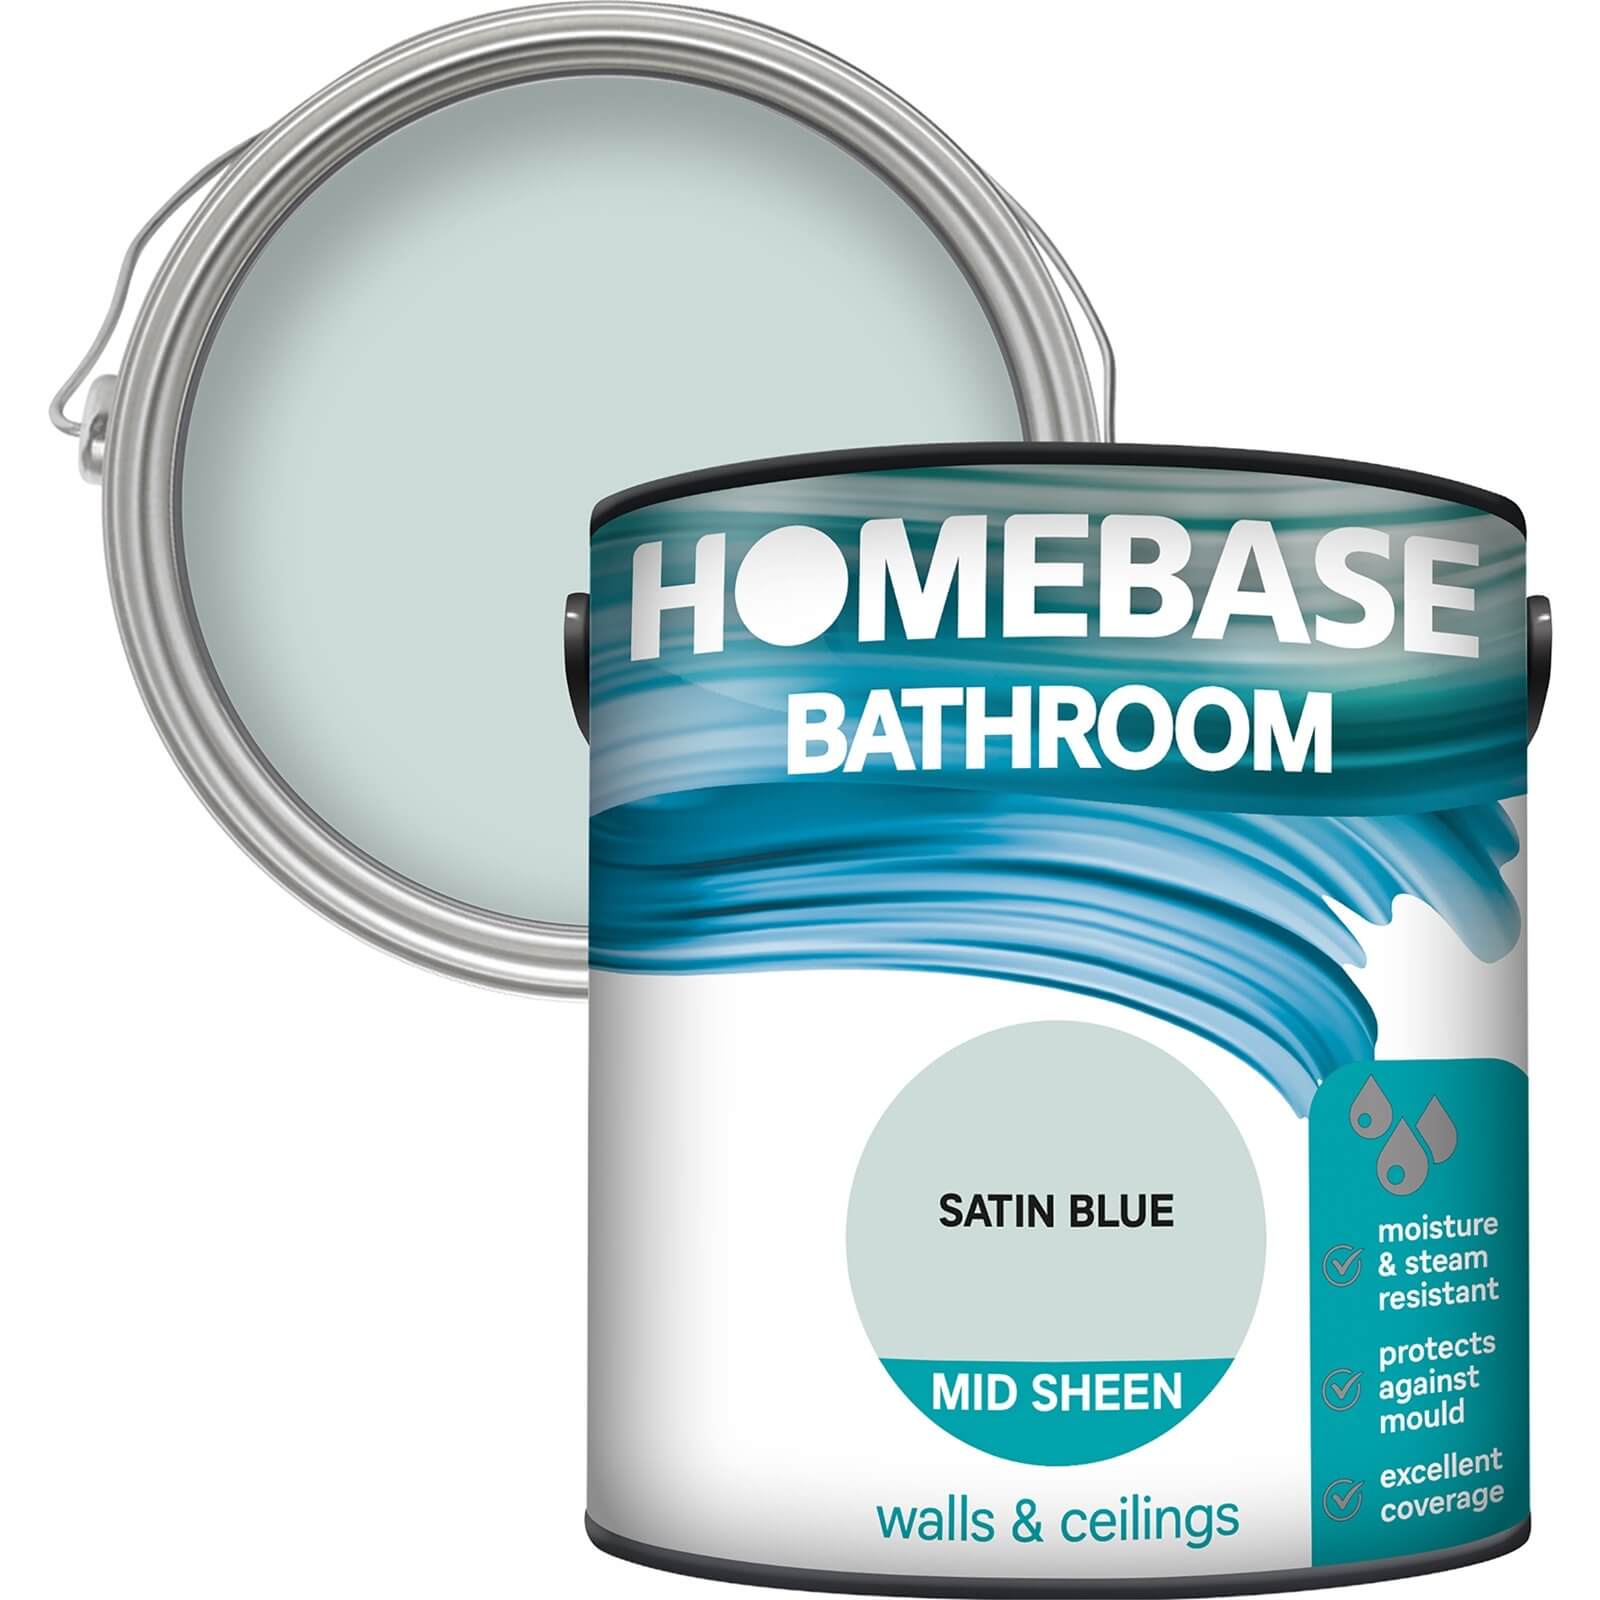 Homebase Bathroom Mid Sheen Paint - Satin Blue 2.5L